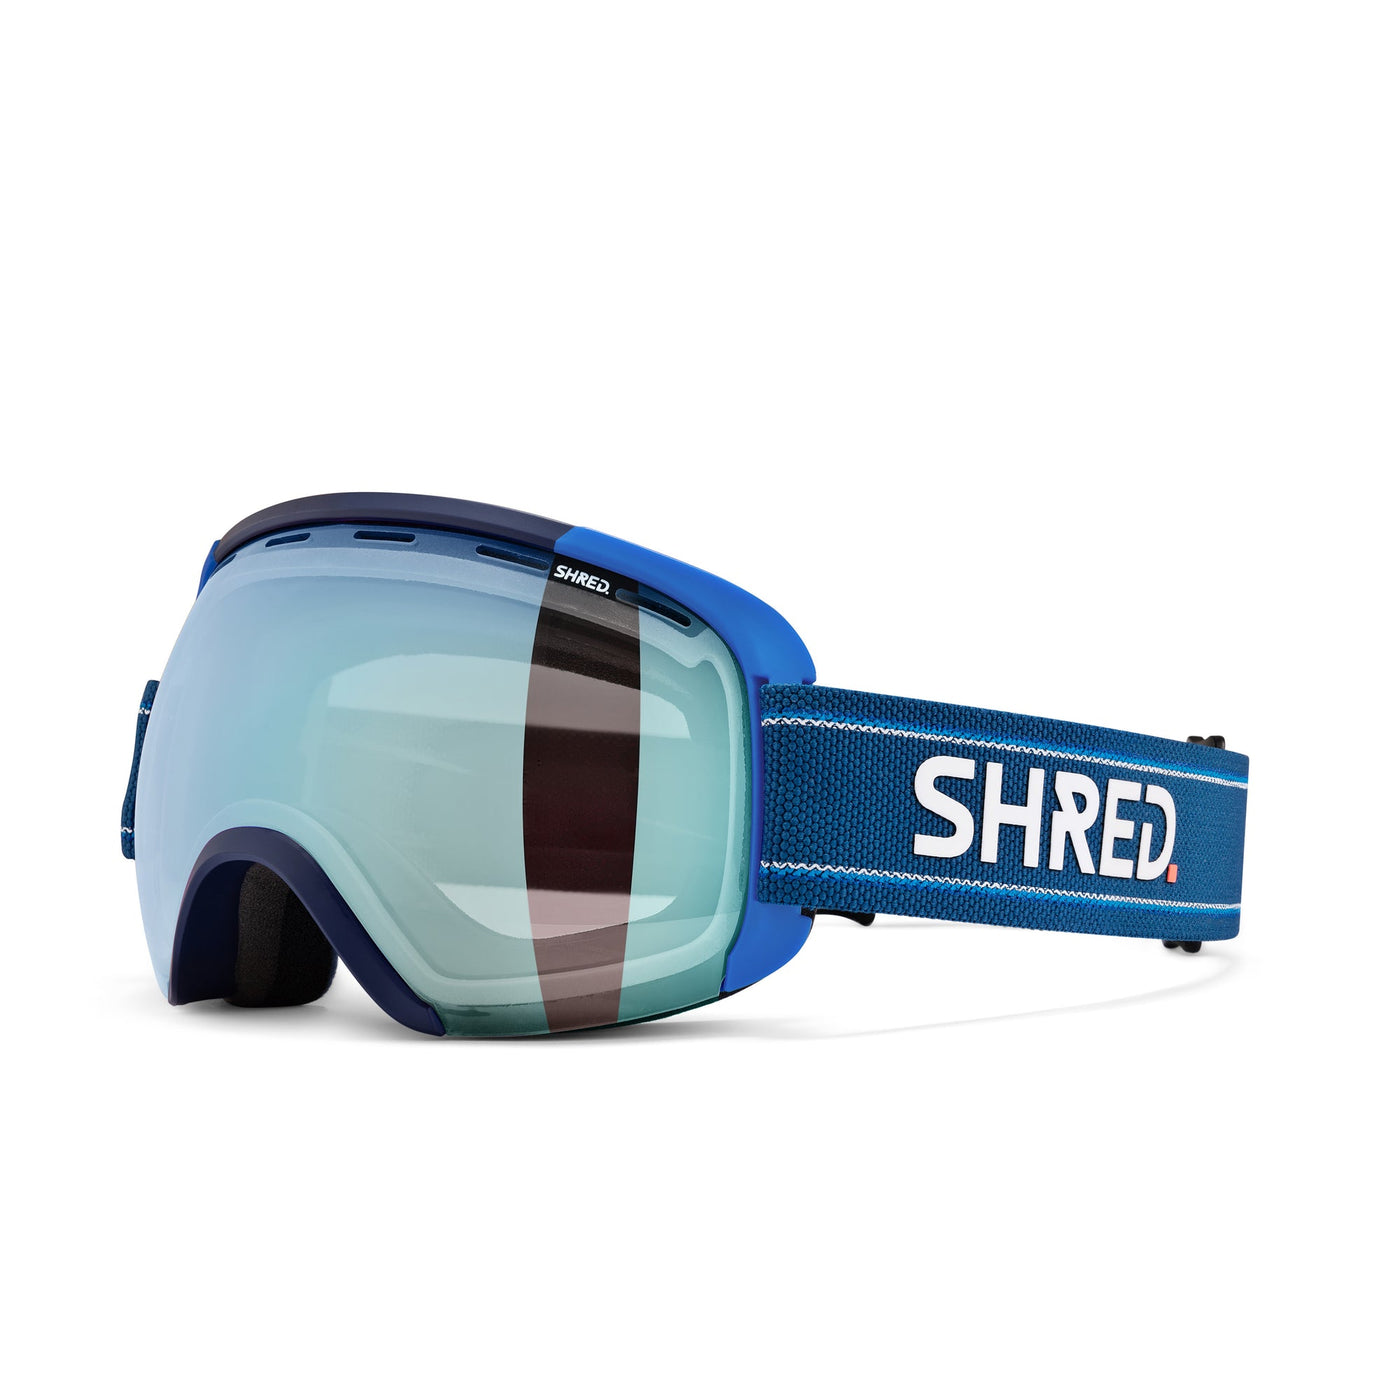 Exemplify Lightning Village Ski Hut Shred Adult Goggles, Hardgoods accessories, Winter 2023